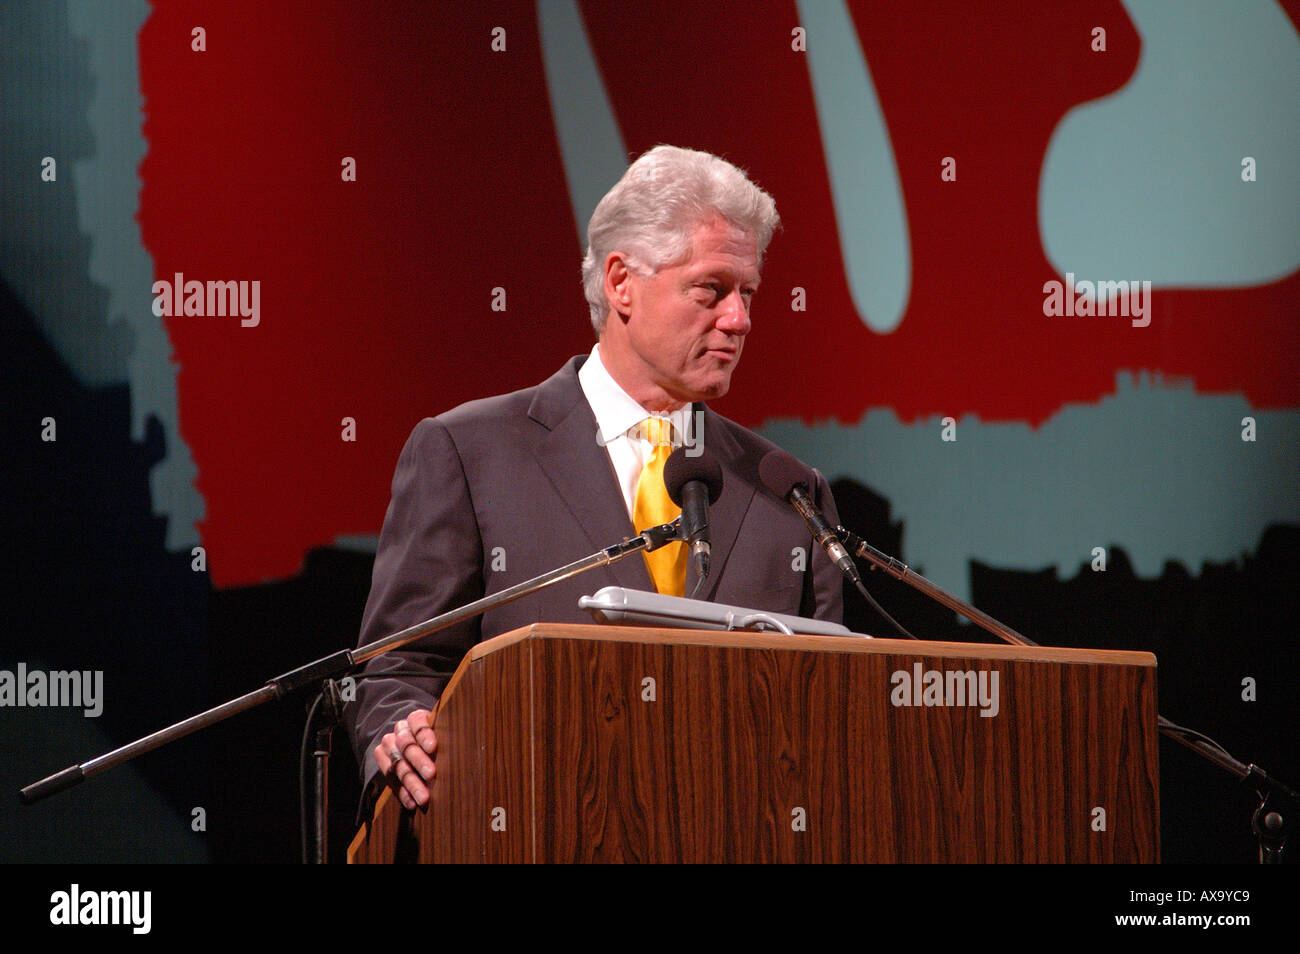 Former American President Bill Clinton at podium making a speech Stock Photo